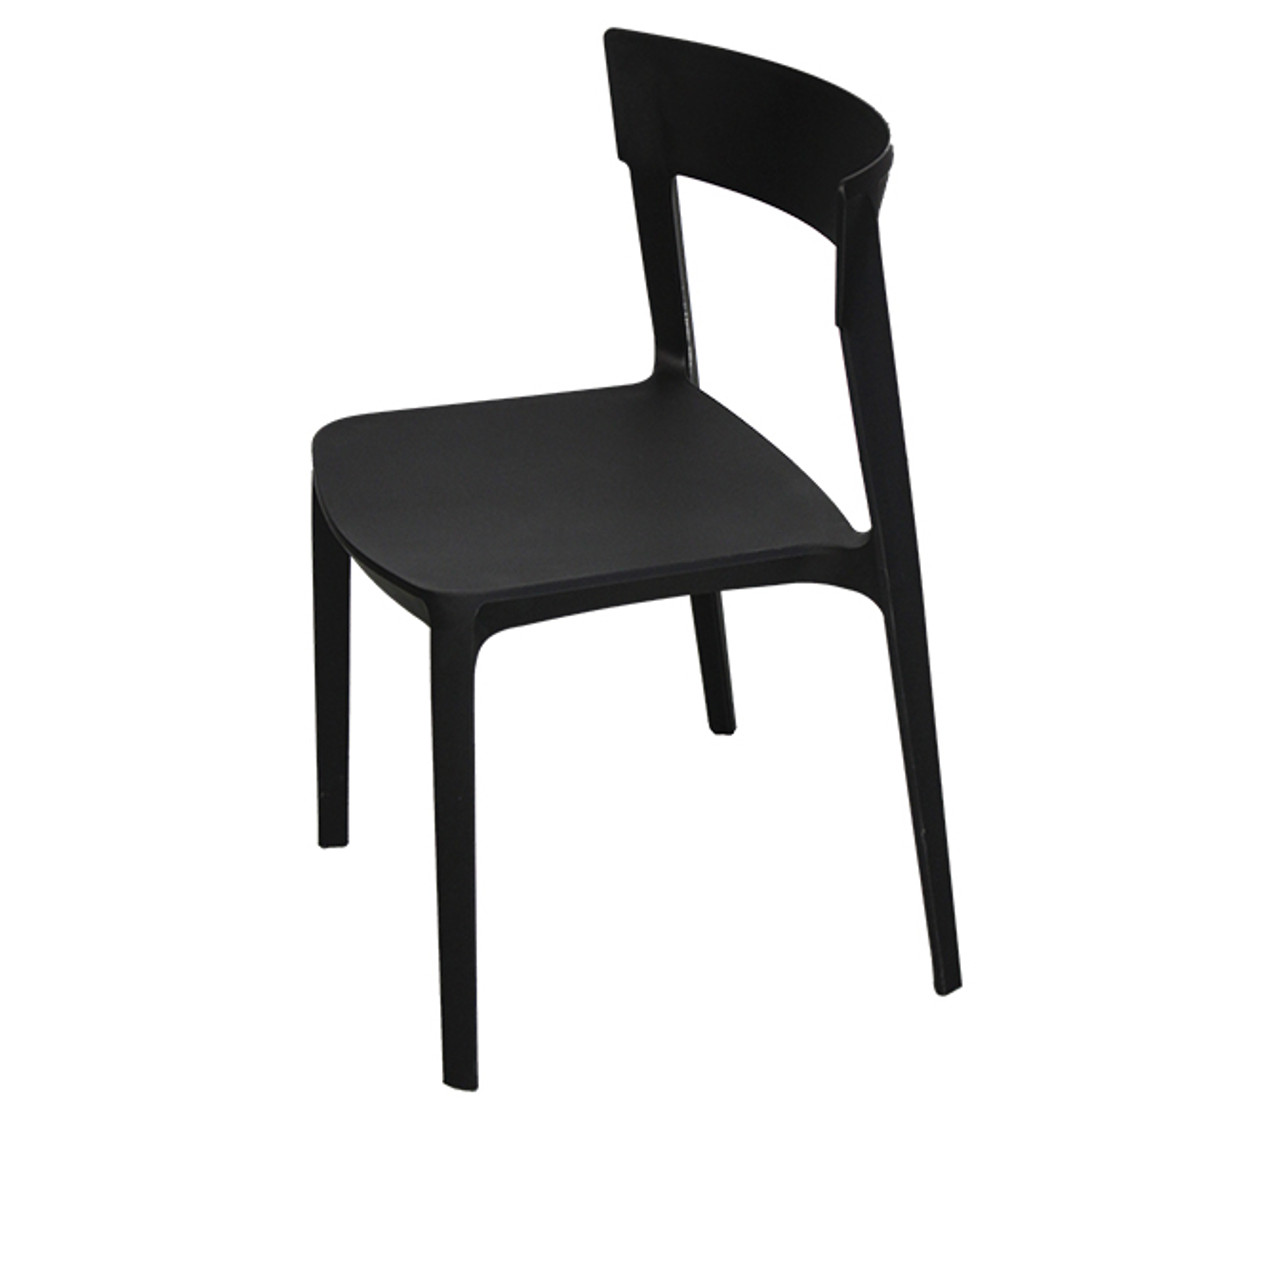 Black Bedford Modern Side Chair